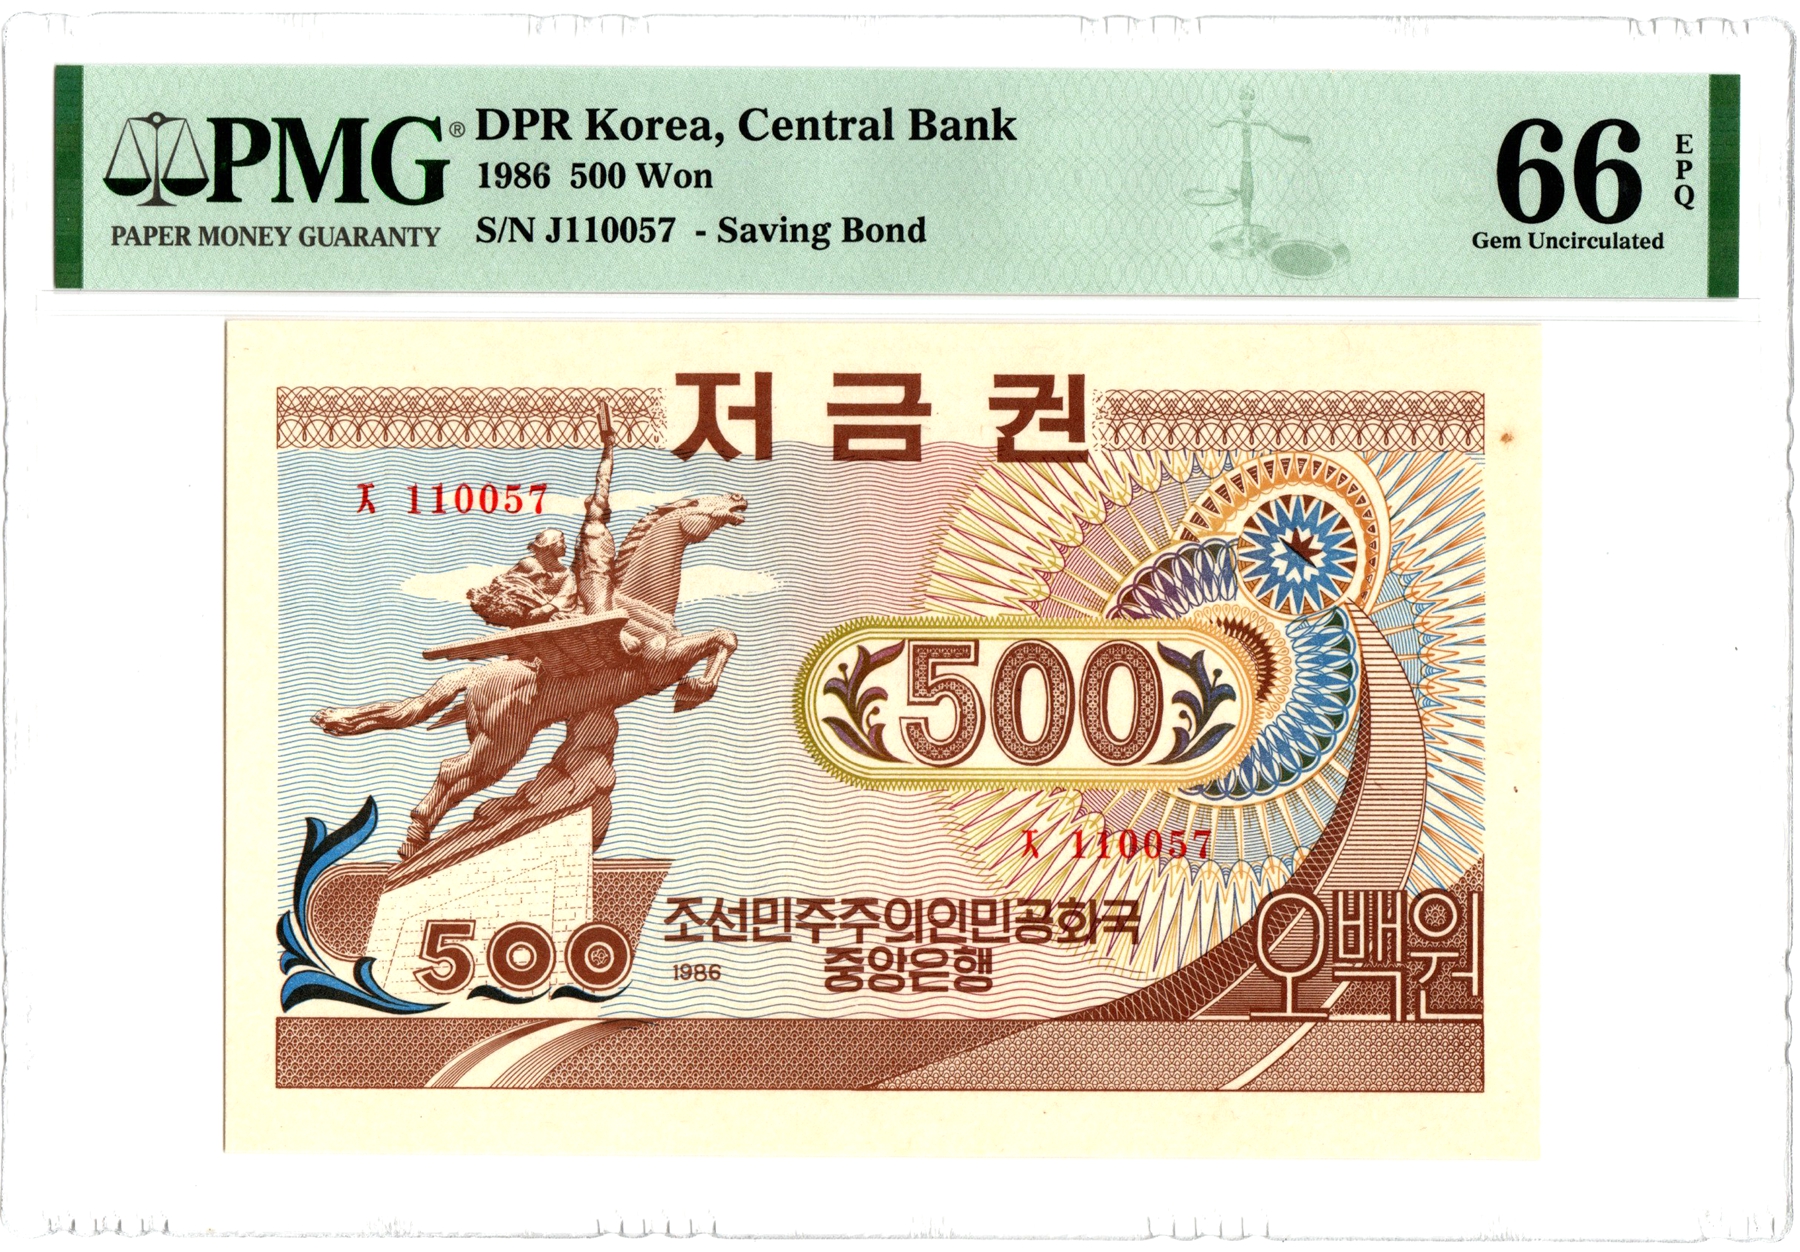 L1265, PMG66 EPQ, Korea Saving Bond 500 Wons, 1986